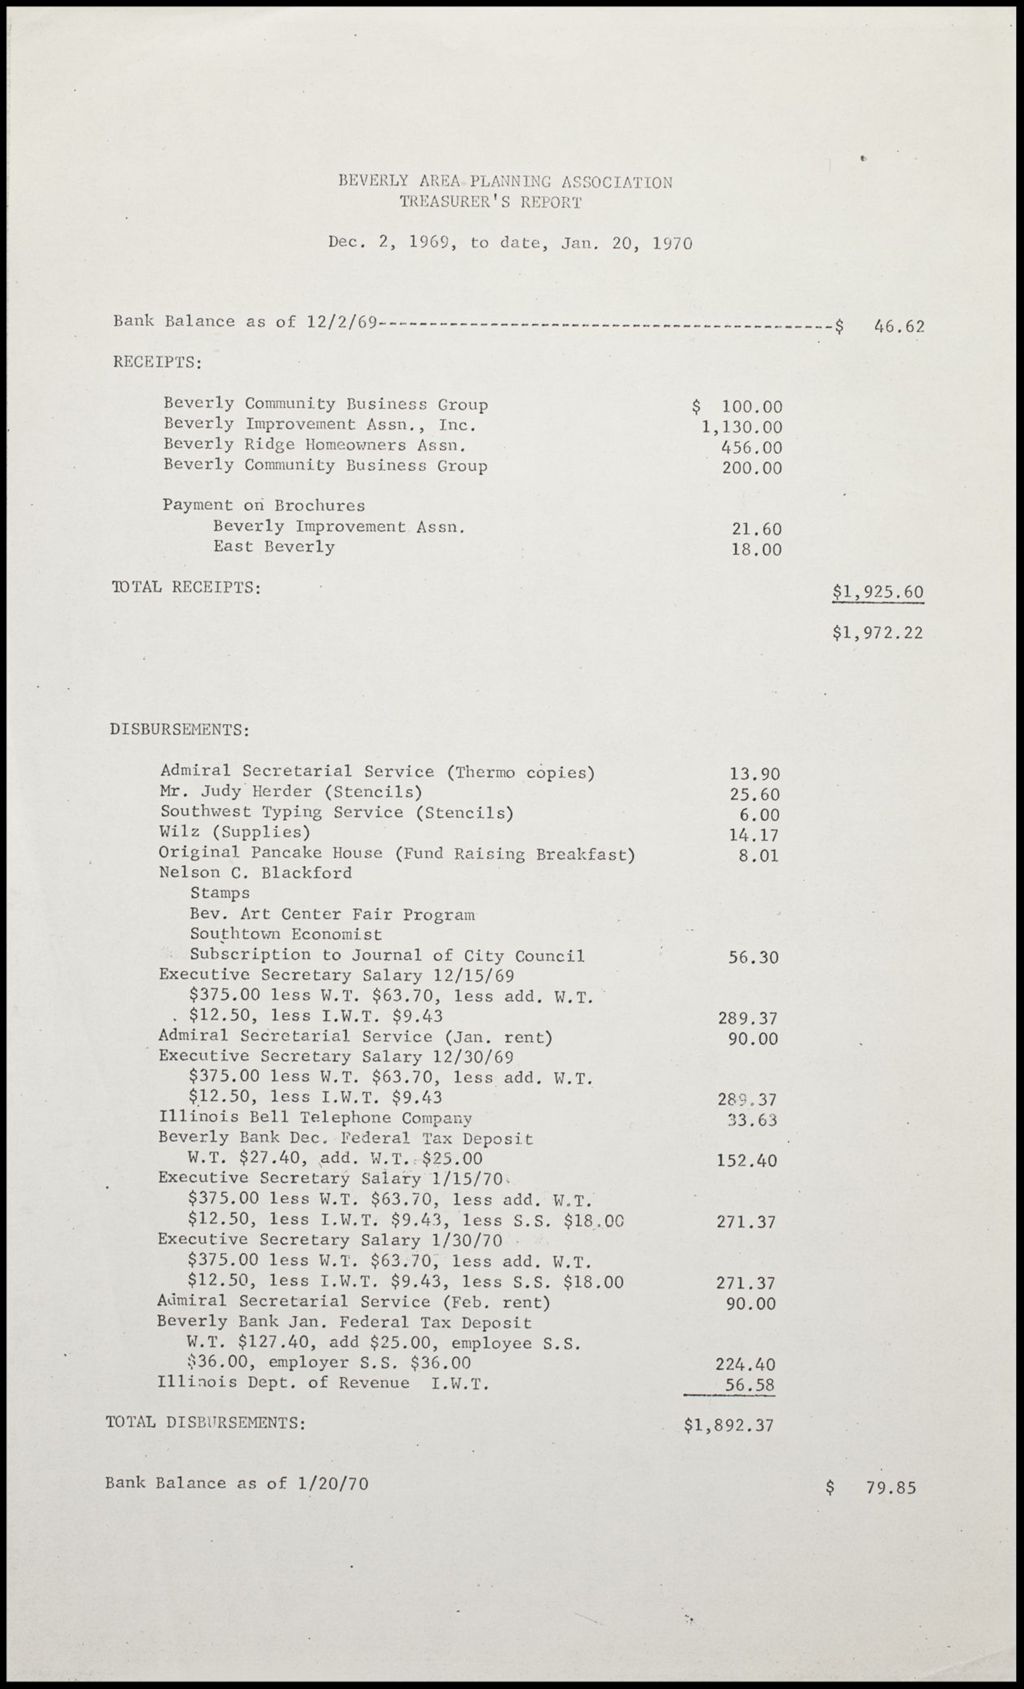 Miniature of BAPA receipts (Folder 249)